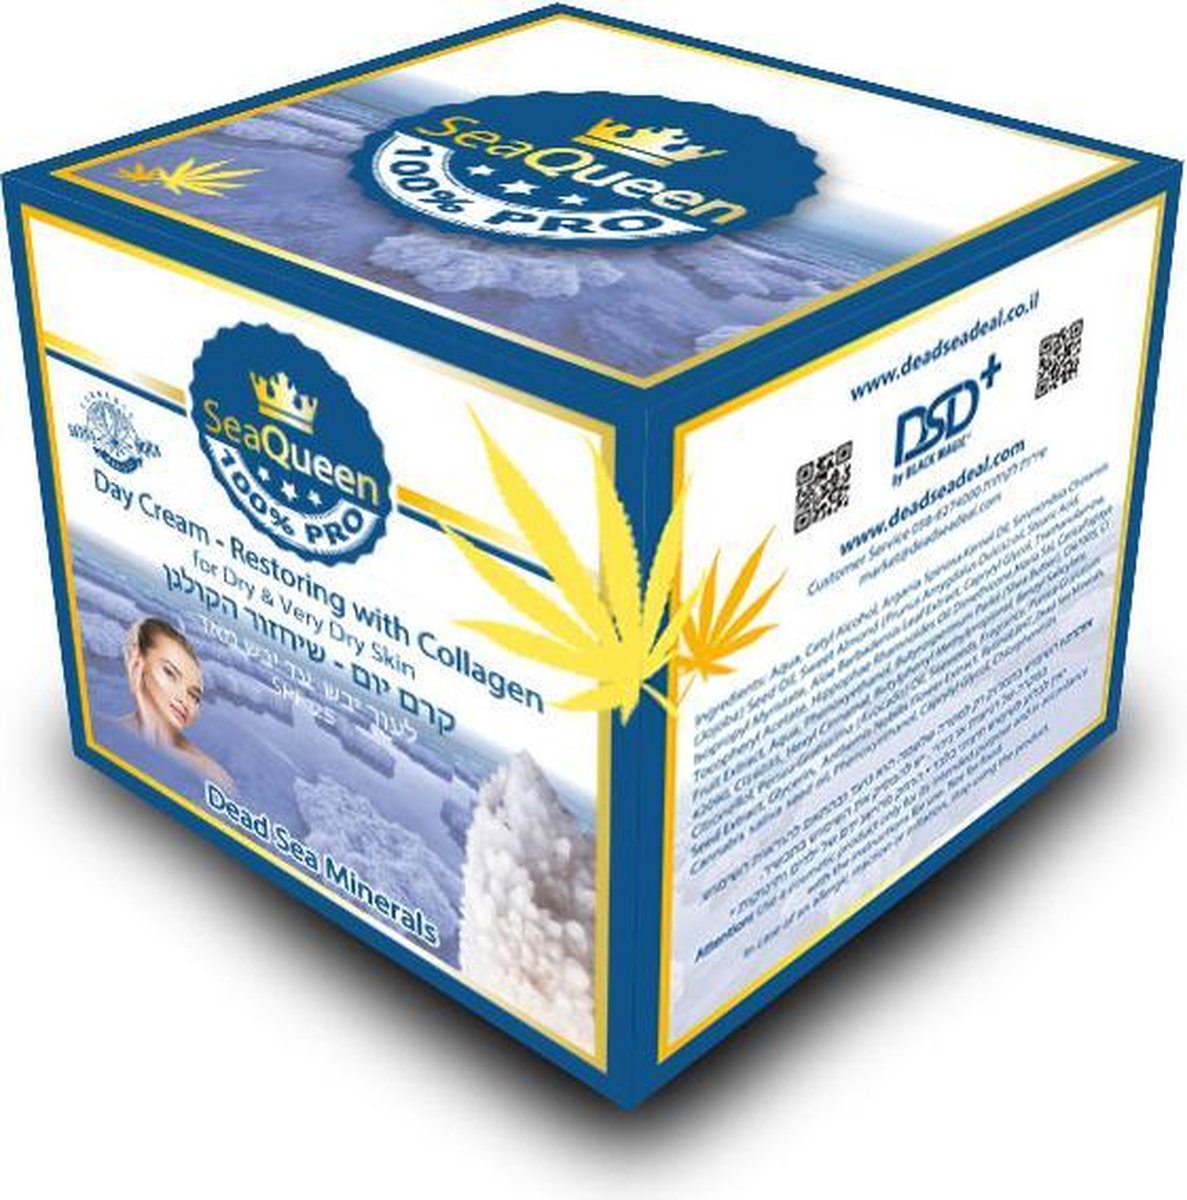 SeaQueen - Dead Sea Minerals Cannabis Day Cream - Restoring with Collagen for Dry Skin SPF 25 (Dode Zee Mineralen Cannabis Dagcreme - Herstellend met Collageen)